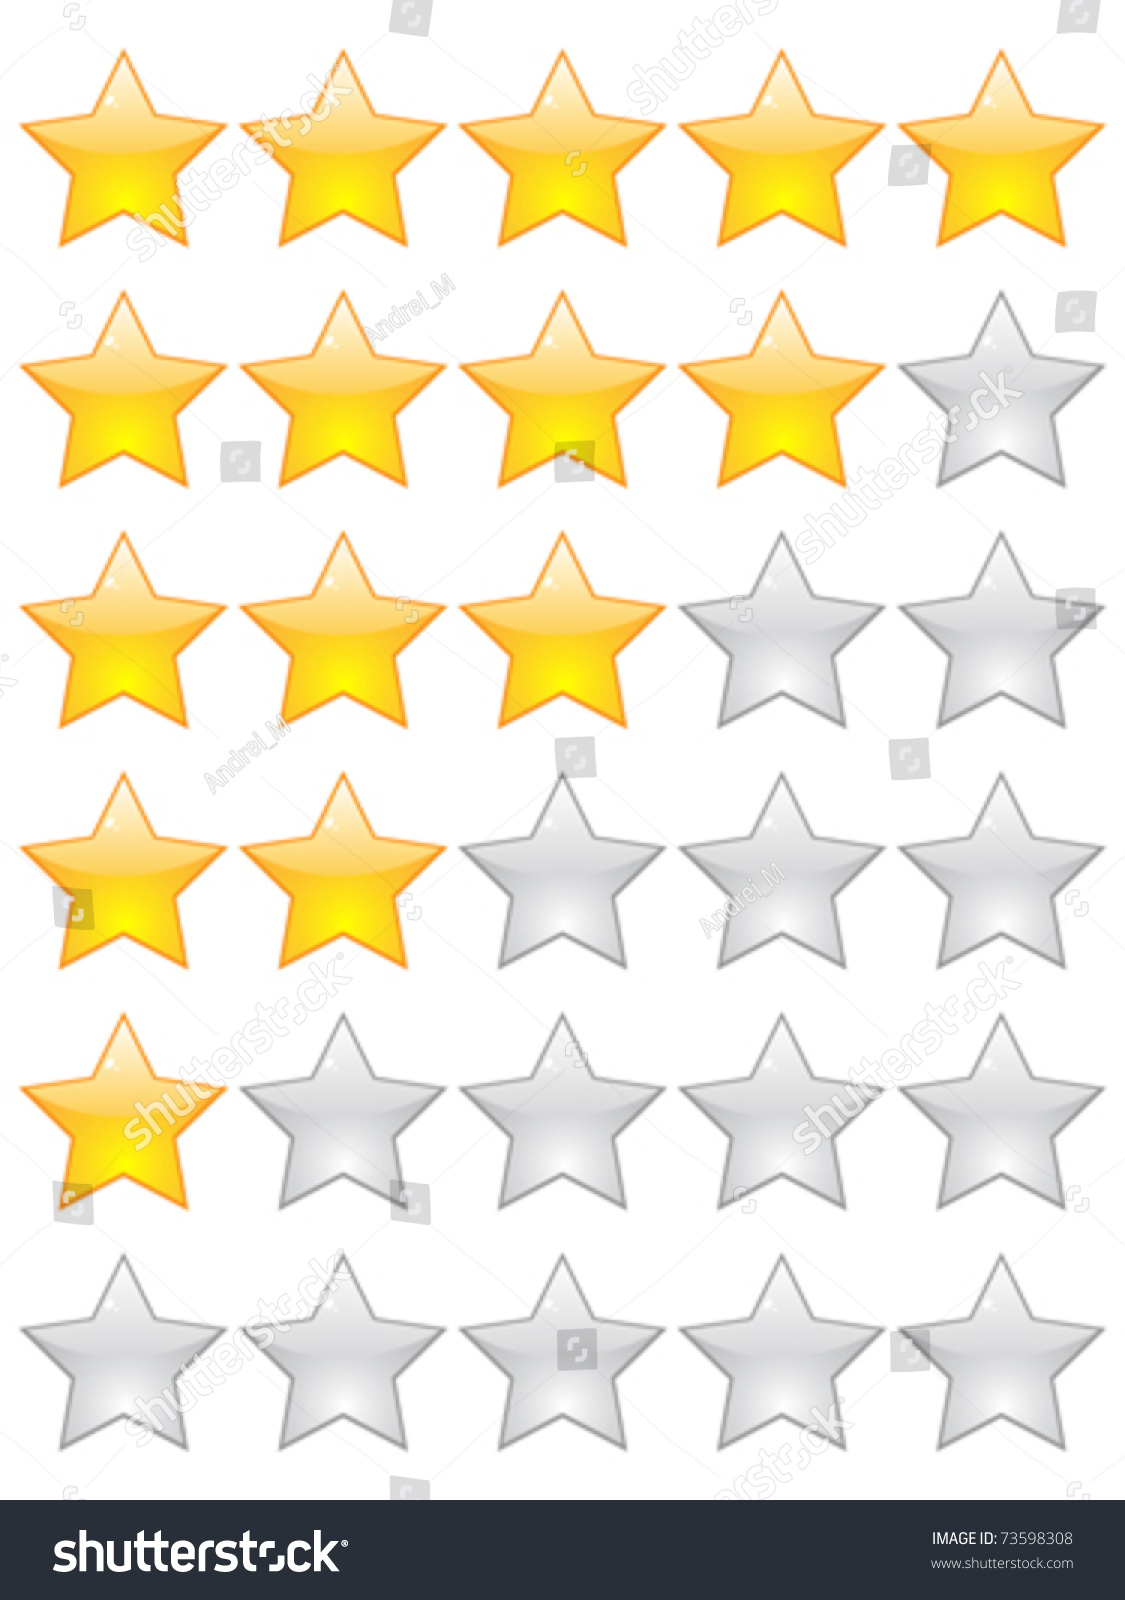 Rating Stars Stock Vector Illustration 73598308 : Shutterstock